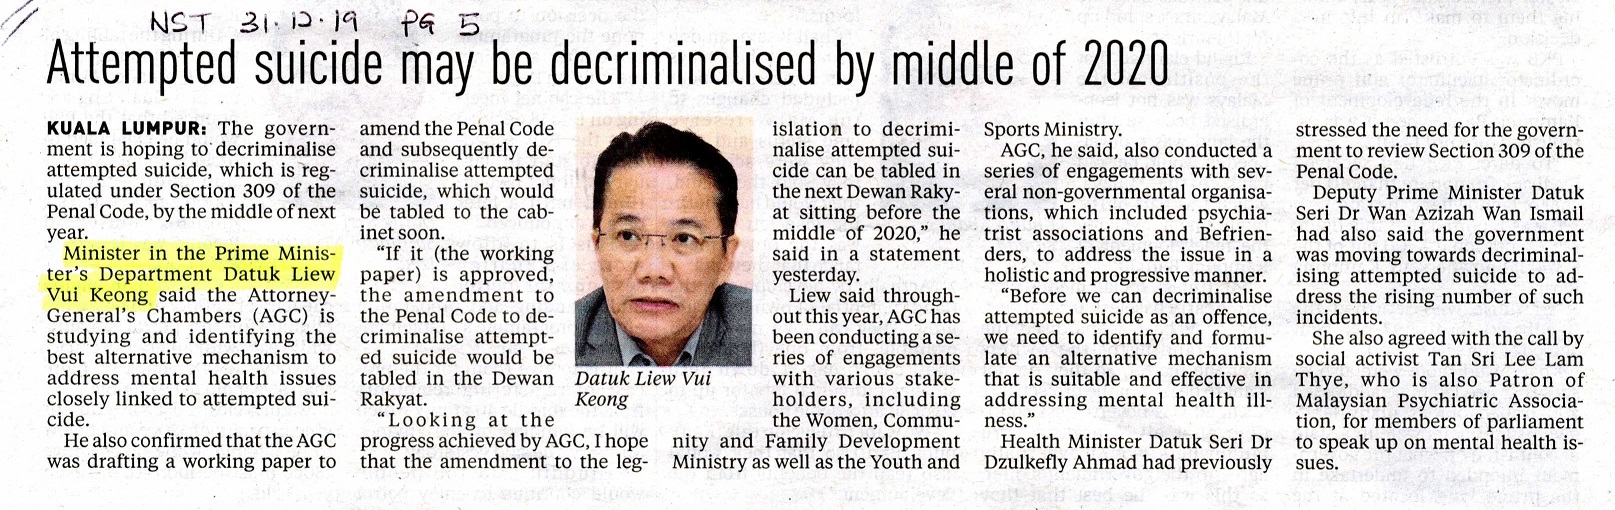 2. New Straits Times 31 December 2019 PG 5